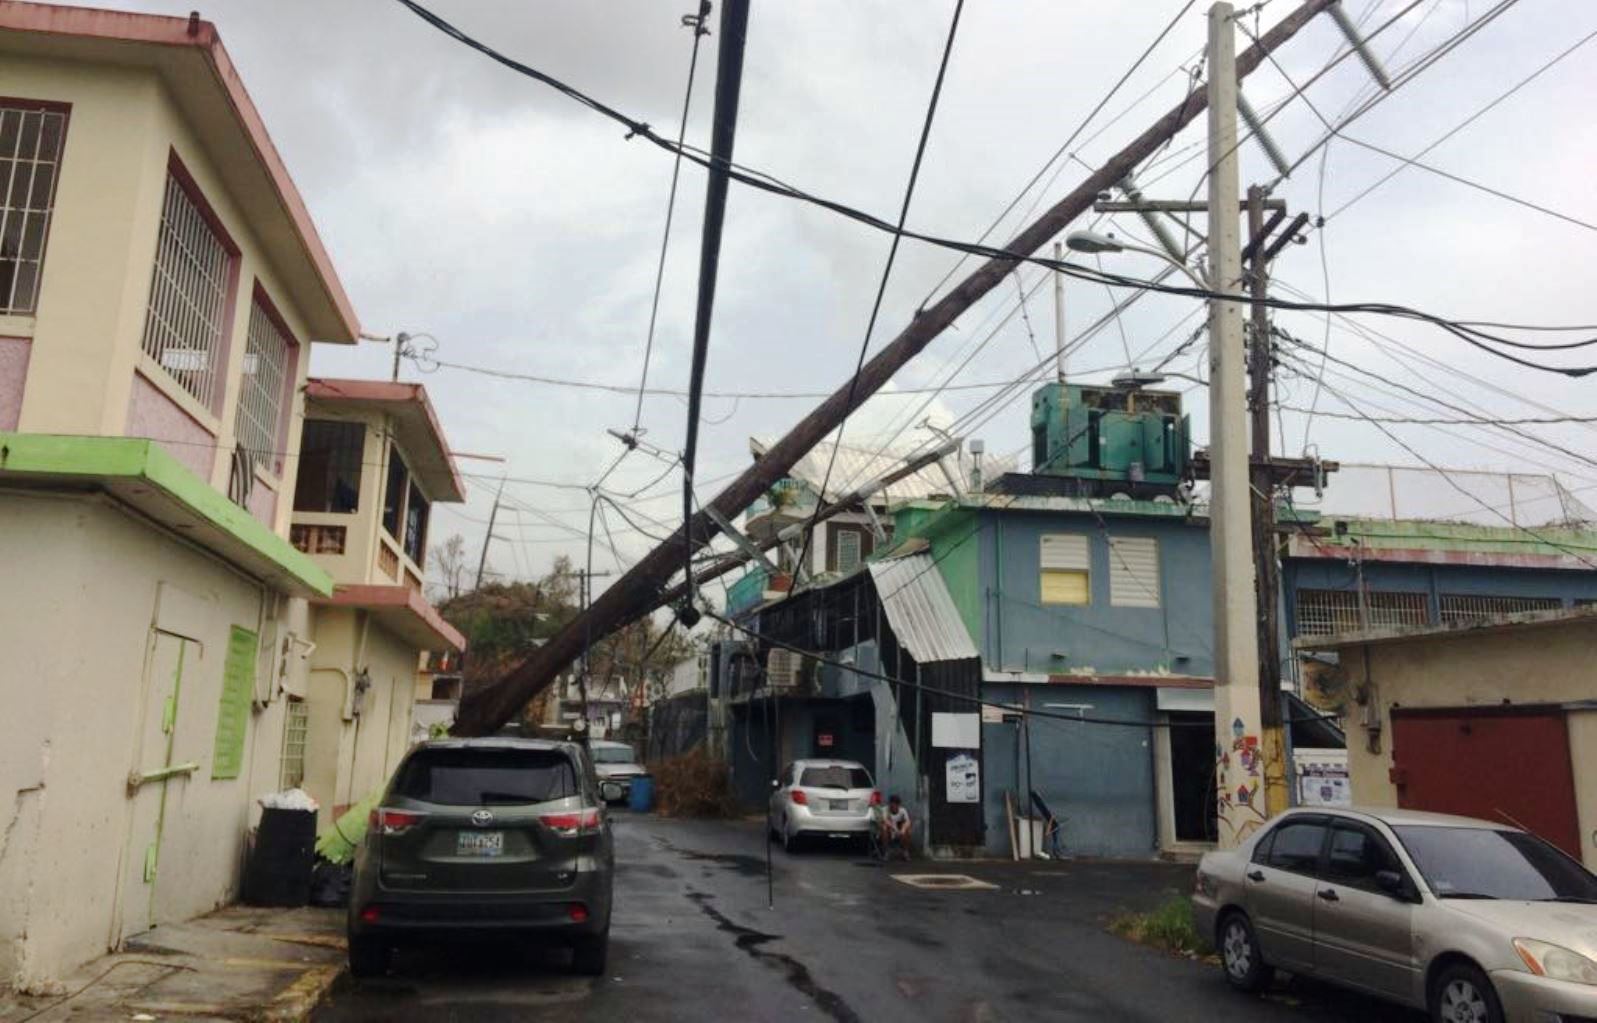 Cap: Devastation in Puerto Rico following Hurricane Maria, September 2017. Photo courtesy of IsraAID